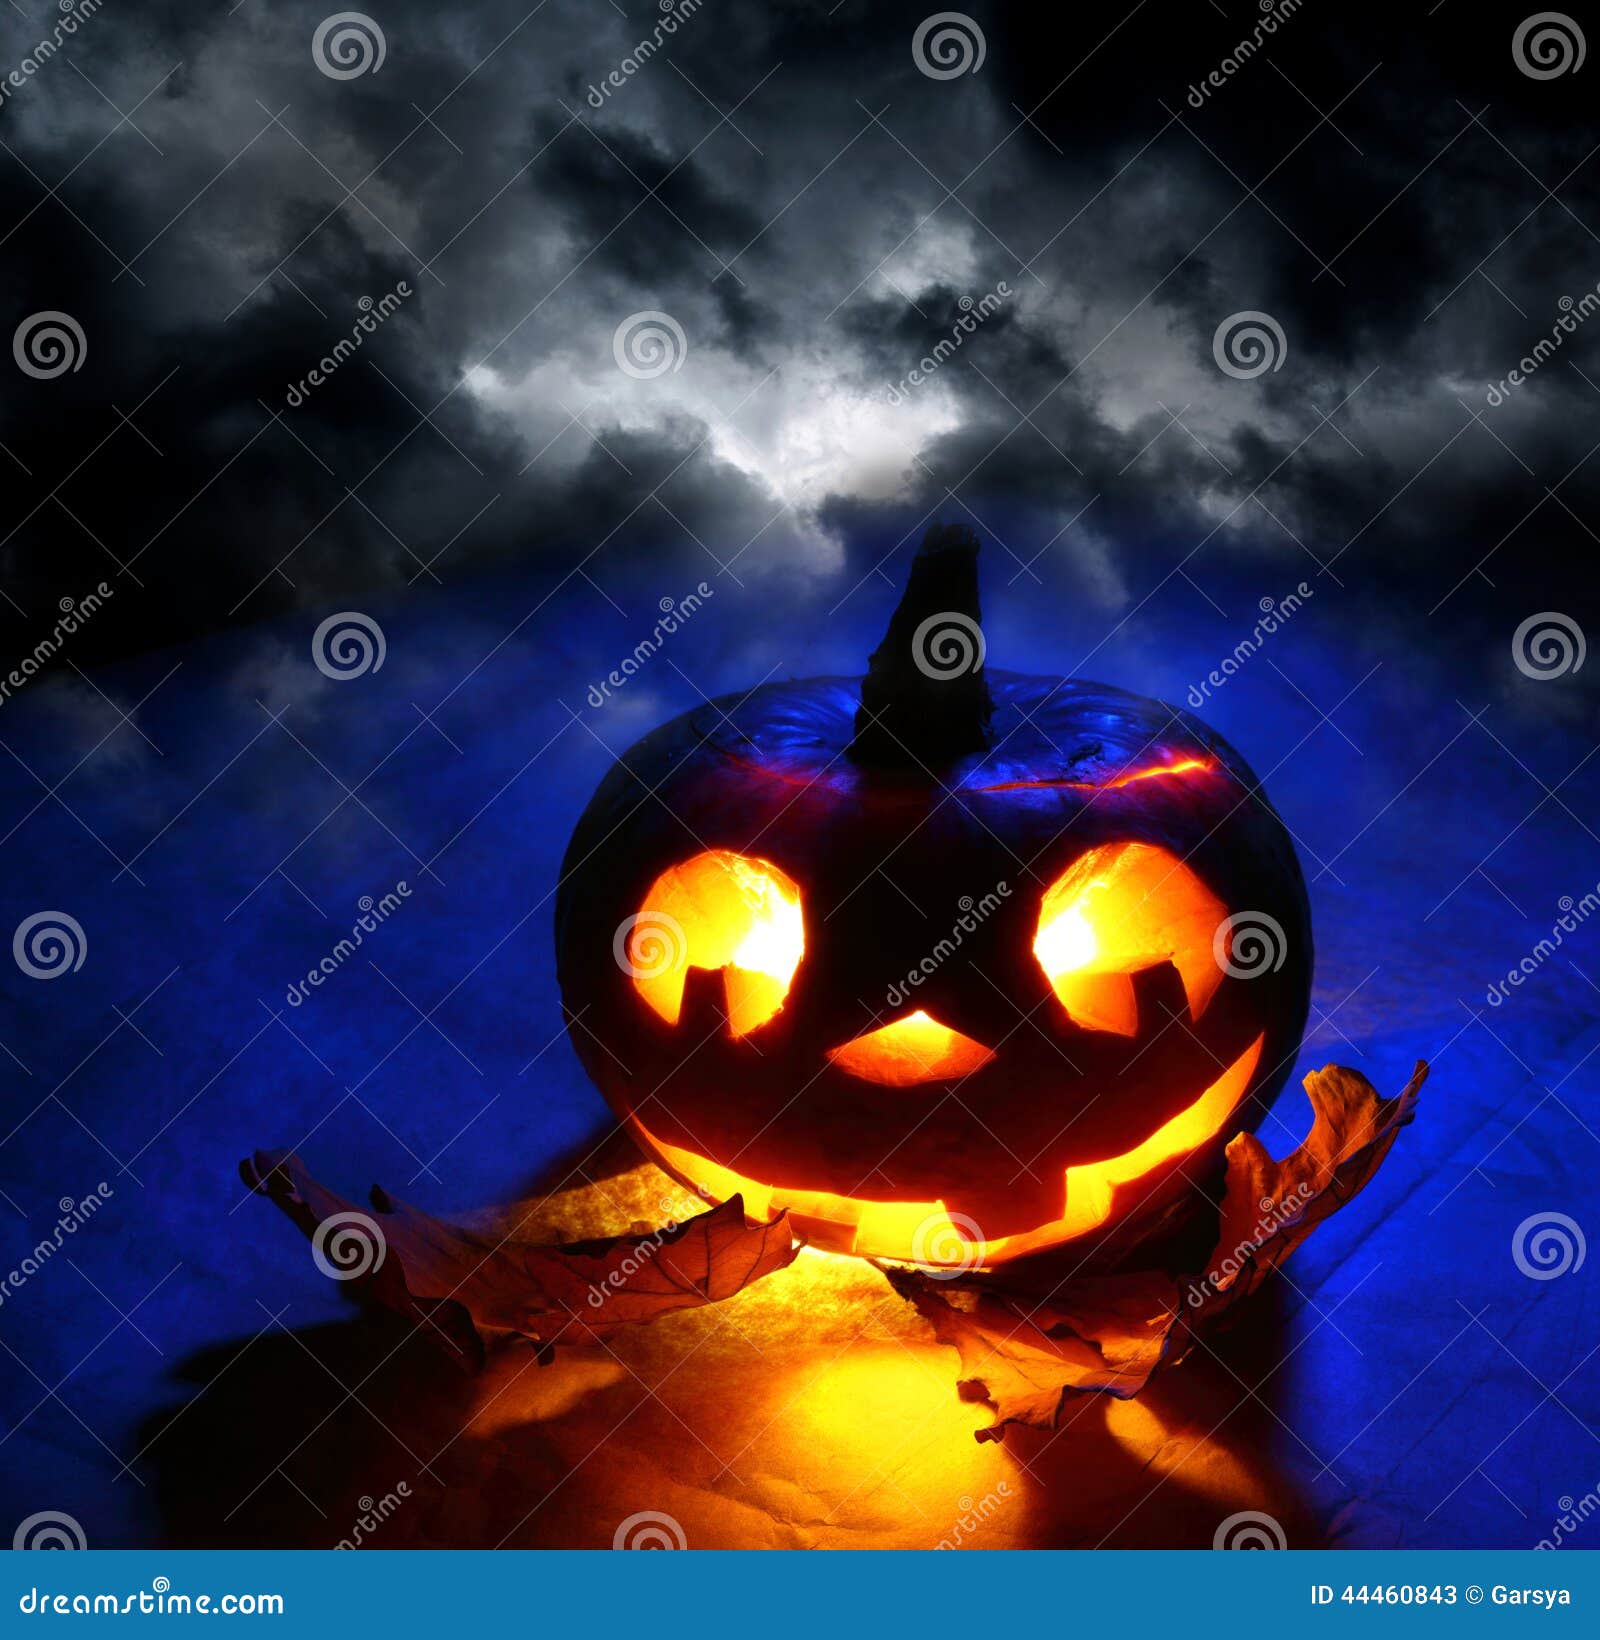 Funny halloween pumpkin stock image. Image of fear, closeup - 44460843